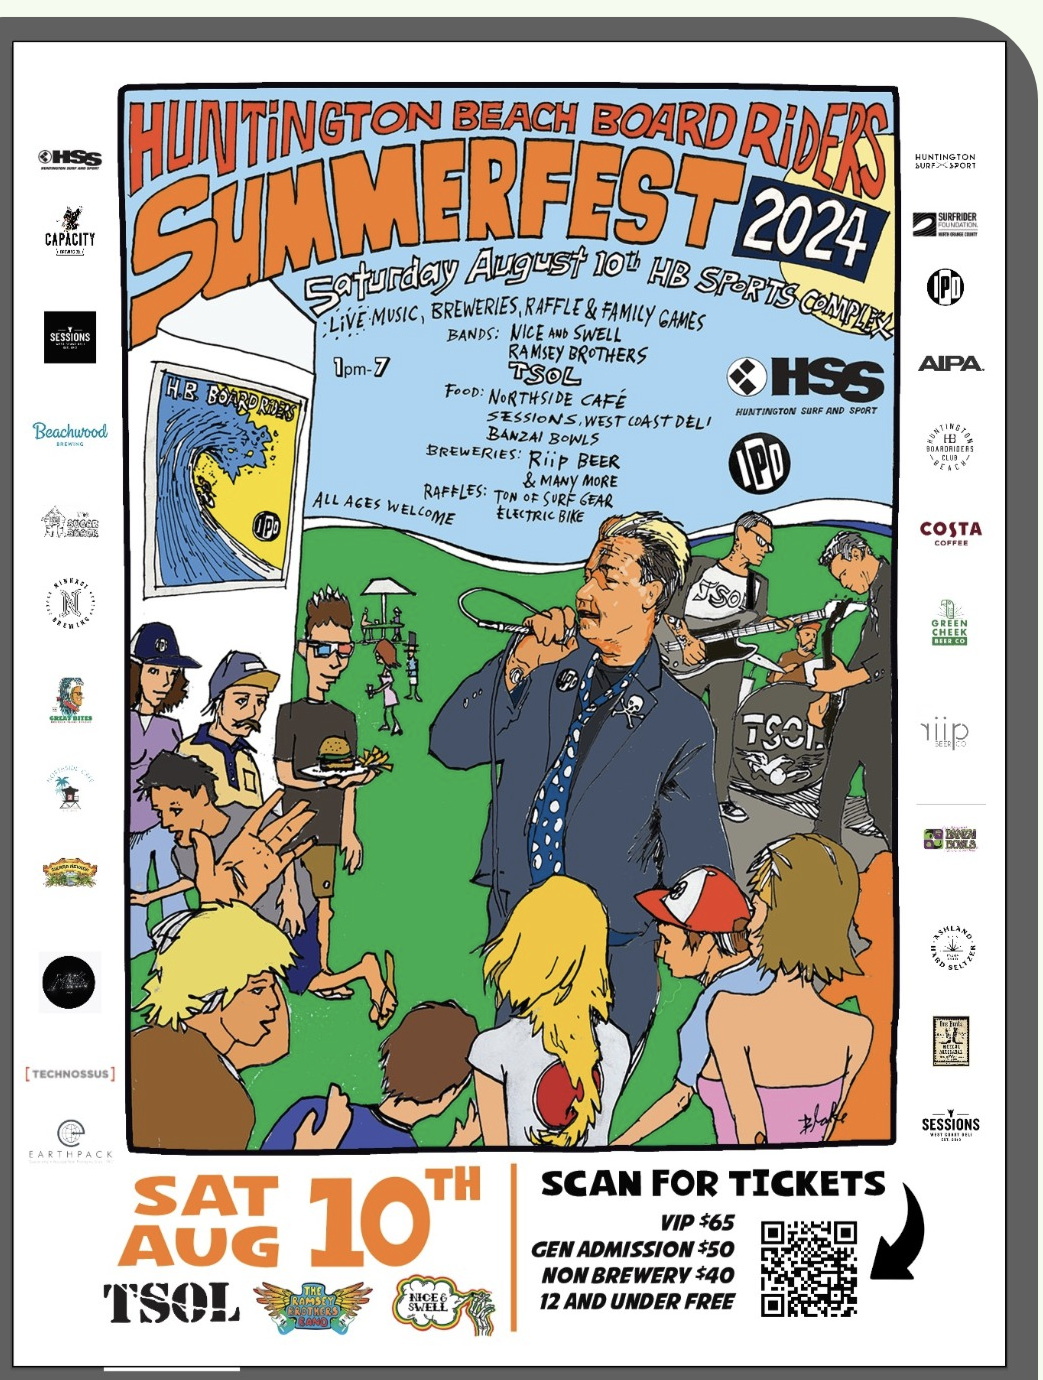 Huntington Beach Board Riders Summerfest